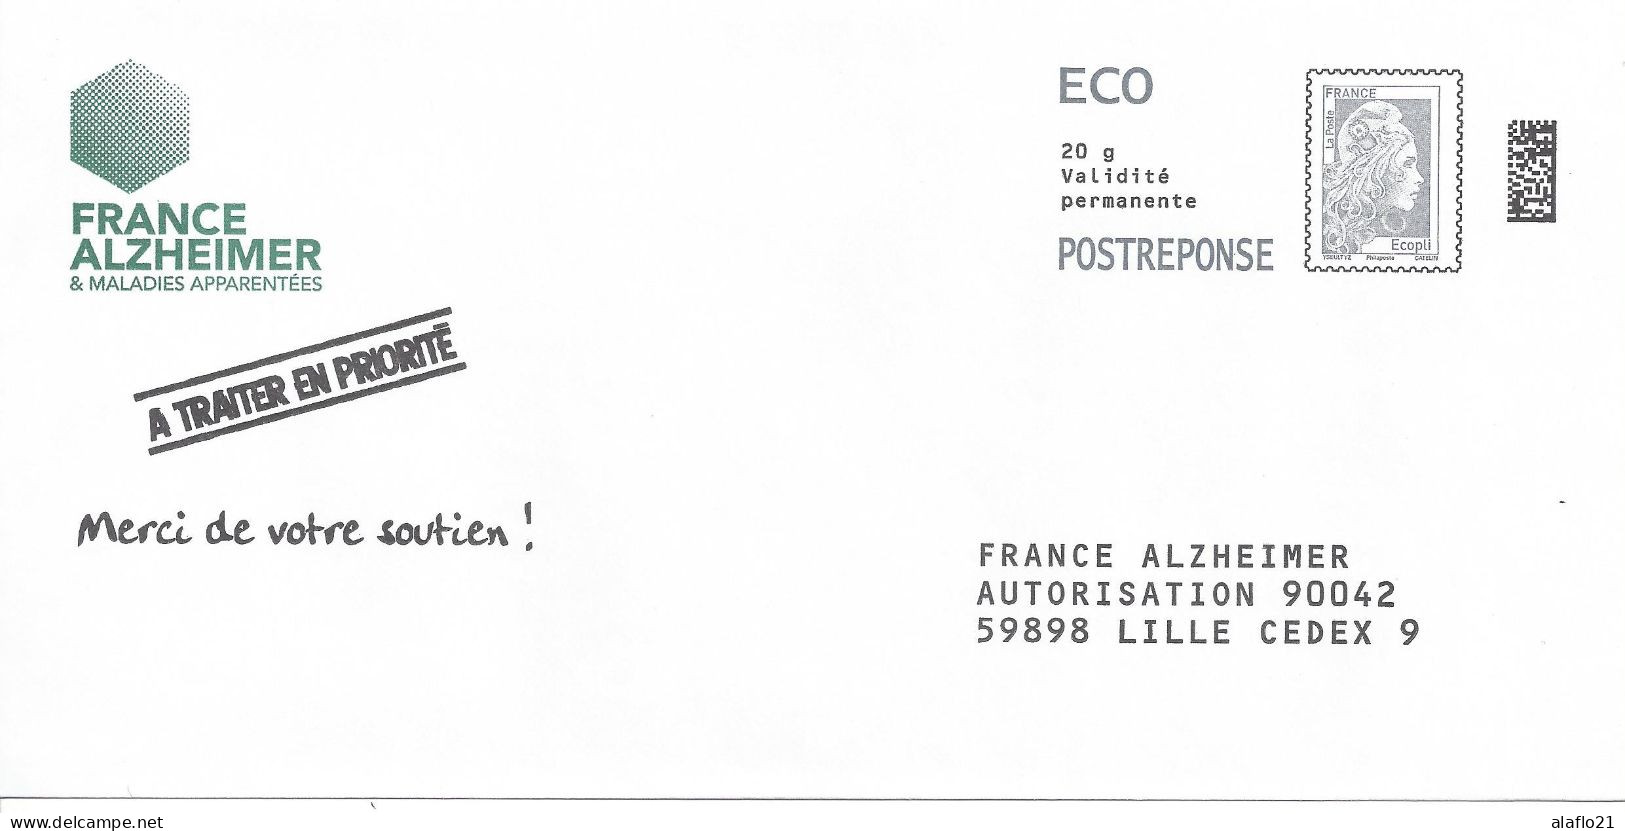 POSTREPONSE ECOPLI - MARIANNE L'ENGAGEE - FRANCE ALZHEIMER - Lot 401920 - Prêts-à-poster:reply